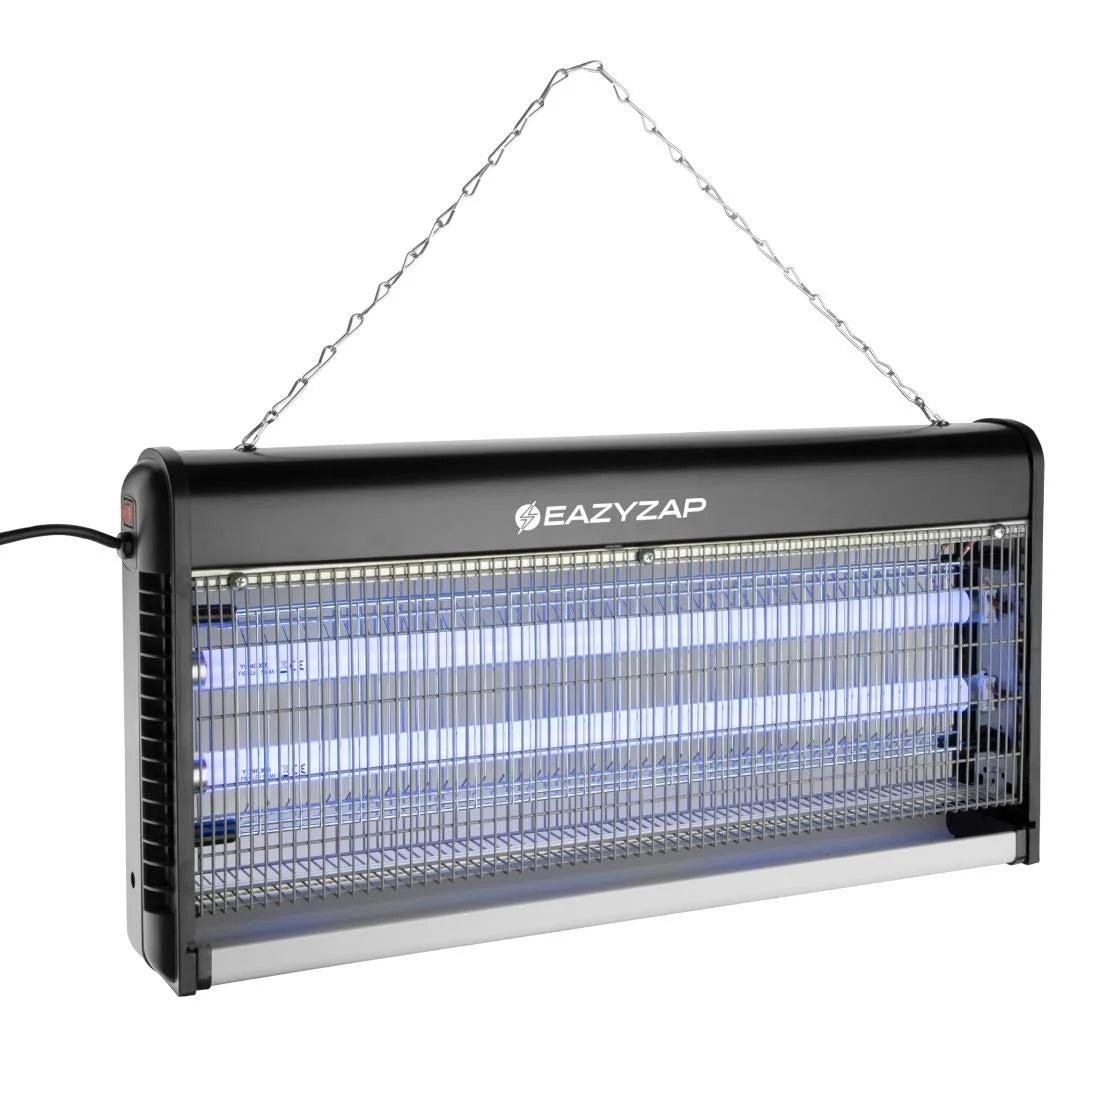 Eazyzap Energy Efficient LED Fly Killer 150m².Product Ref:00734.Model:FD498. 🚚 3-5 Days Delivery